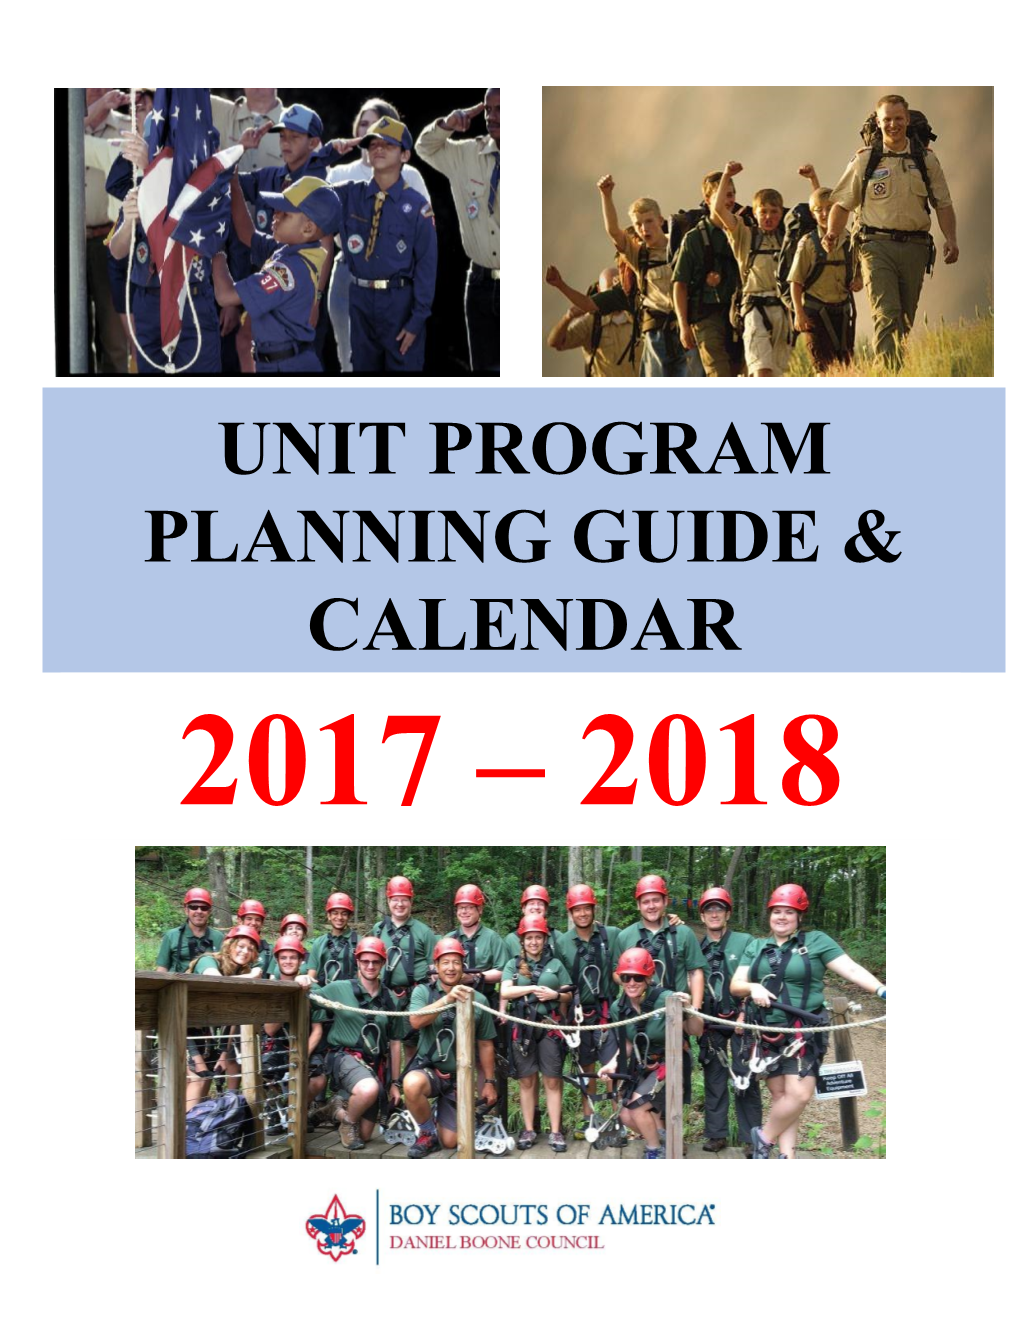 Daniel Boone Council Planning Calendar Guide DocsLib